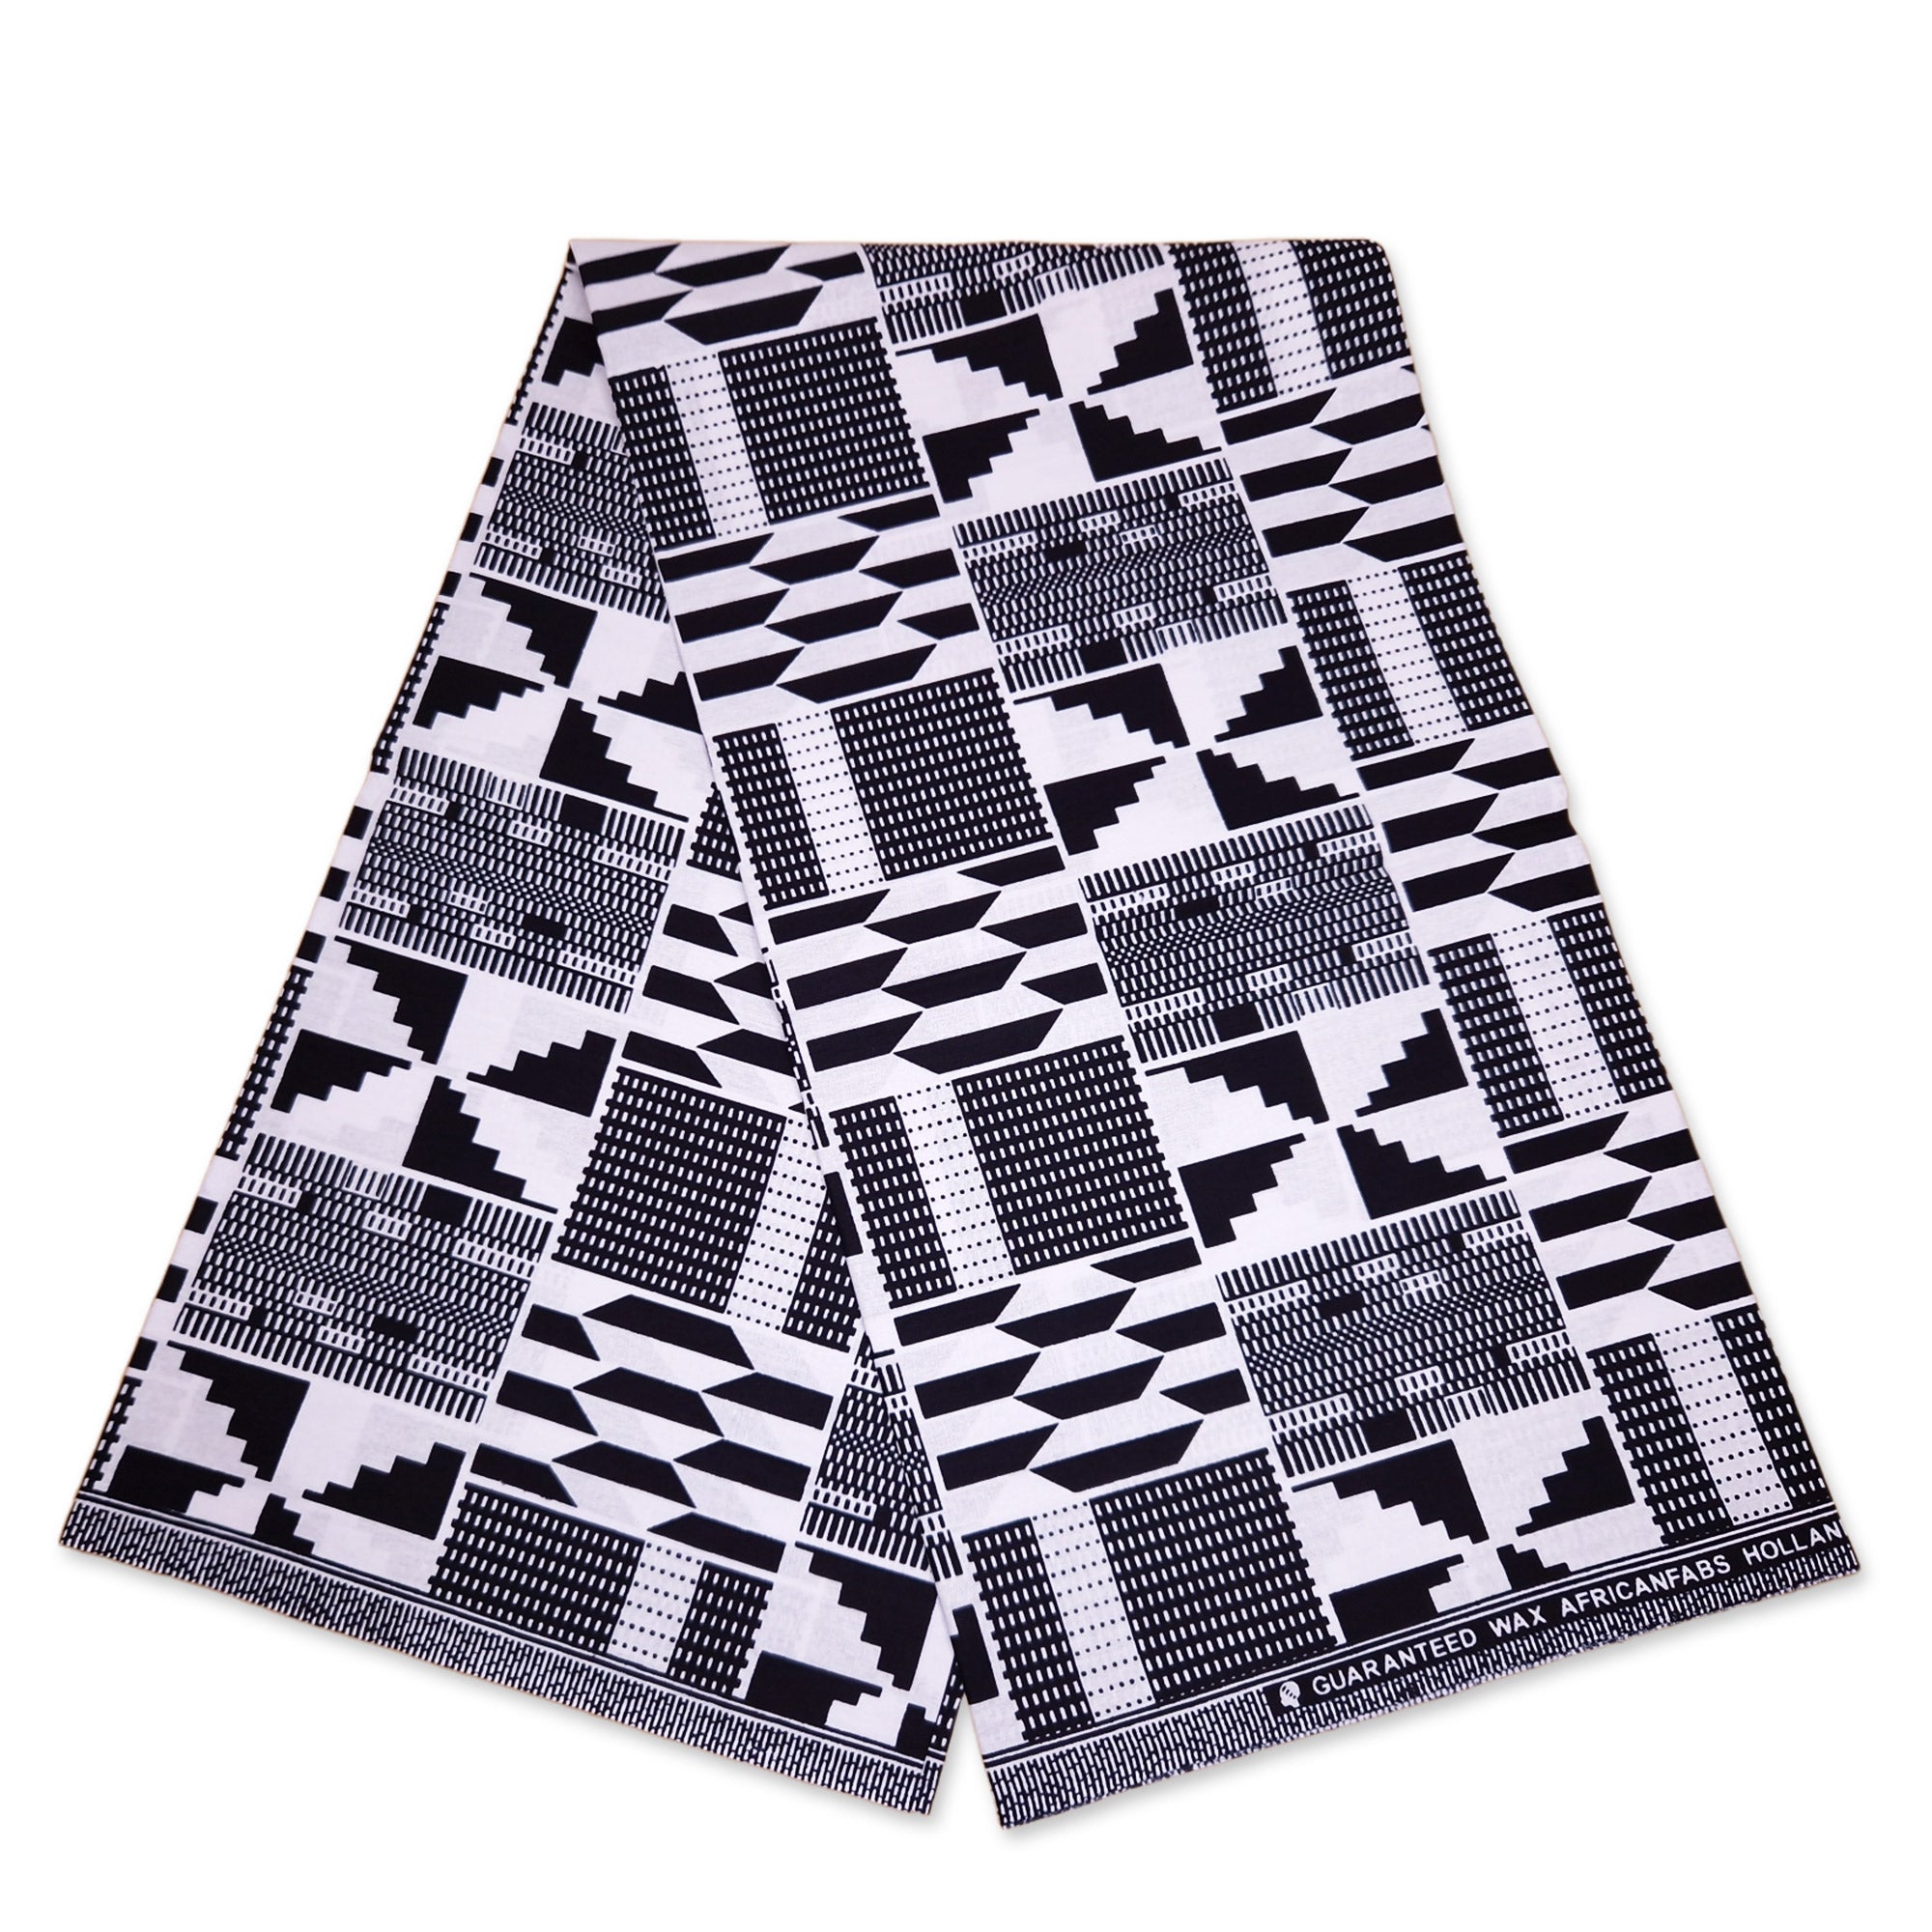 African Black & White Kente print fabric KENTE Ghana wax cloth AF-4043 - 100% Cotton